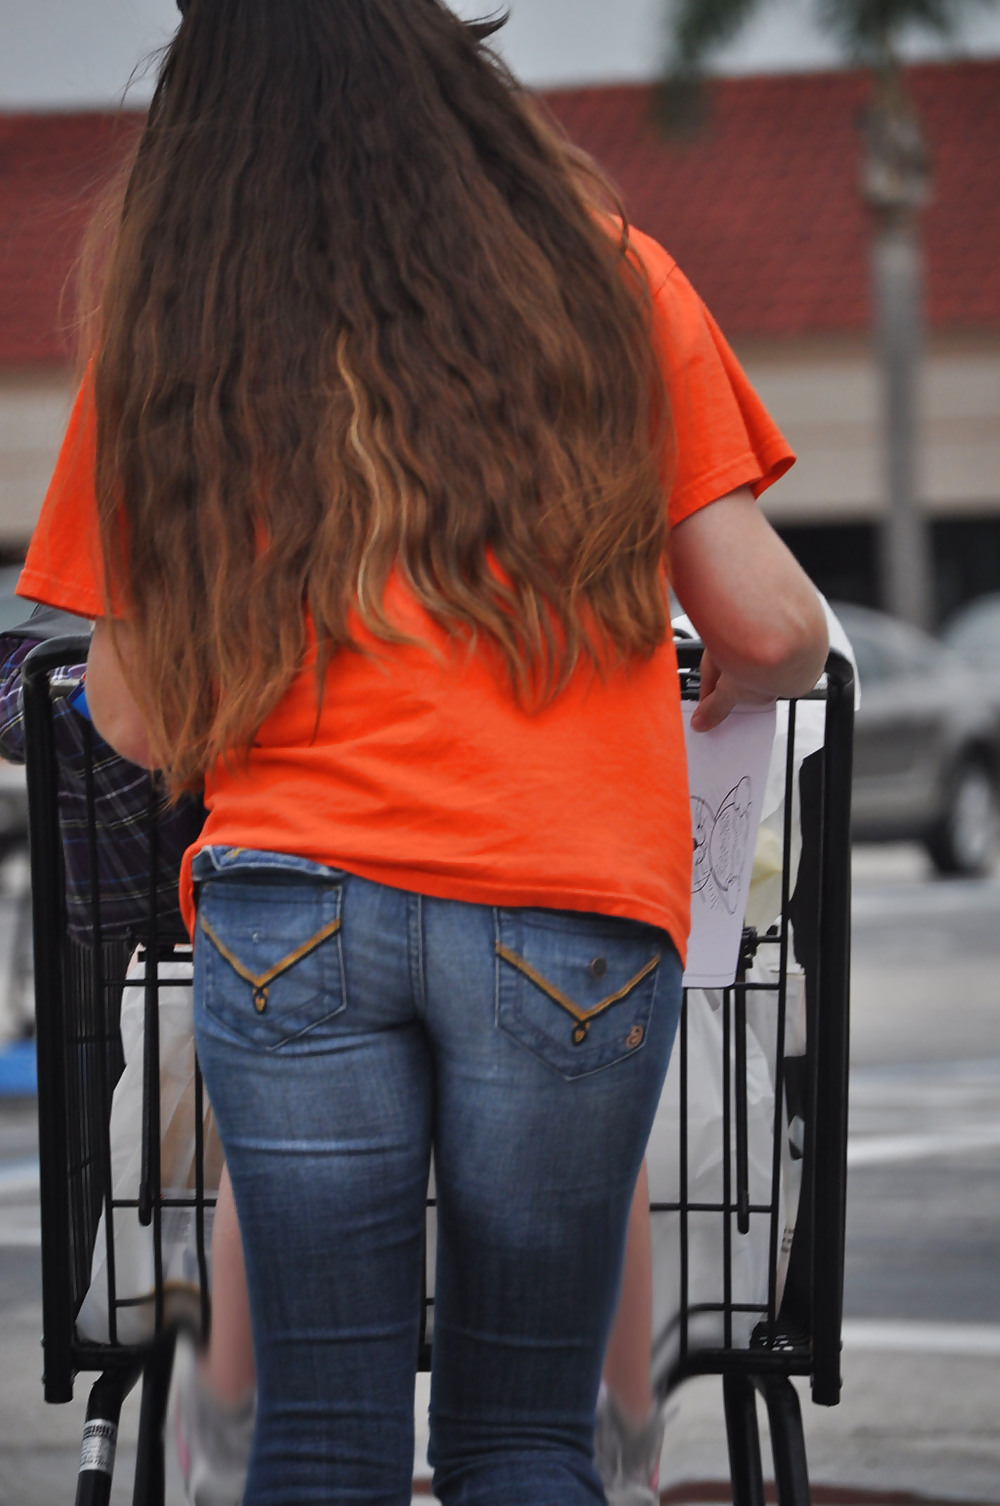 Tight jeans in public #4268127